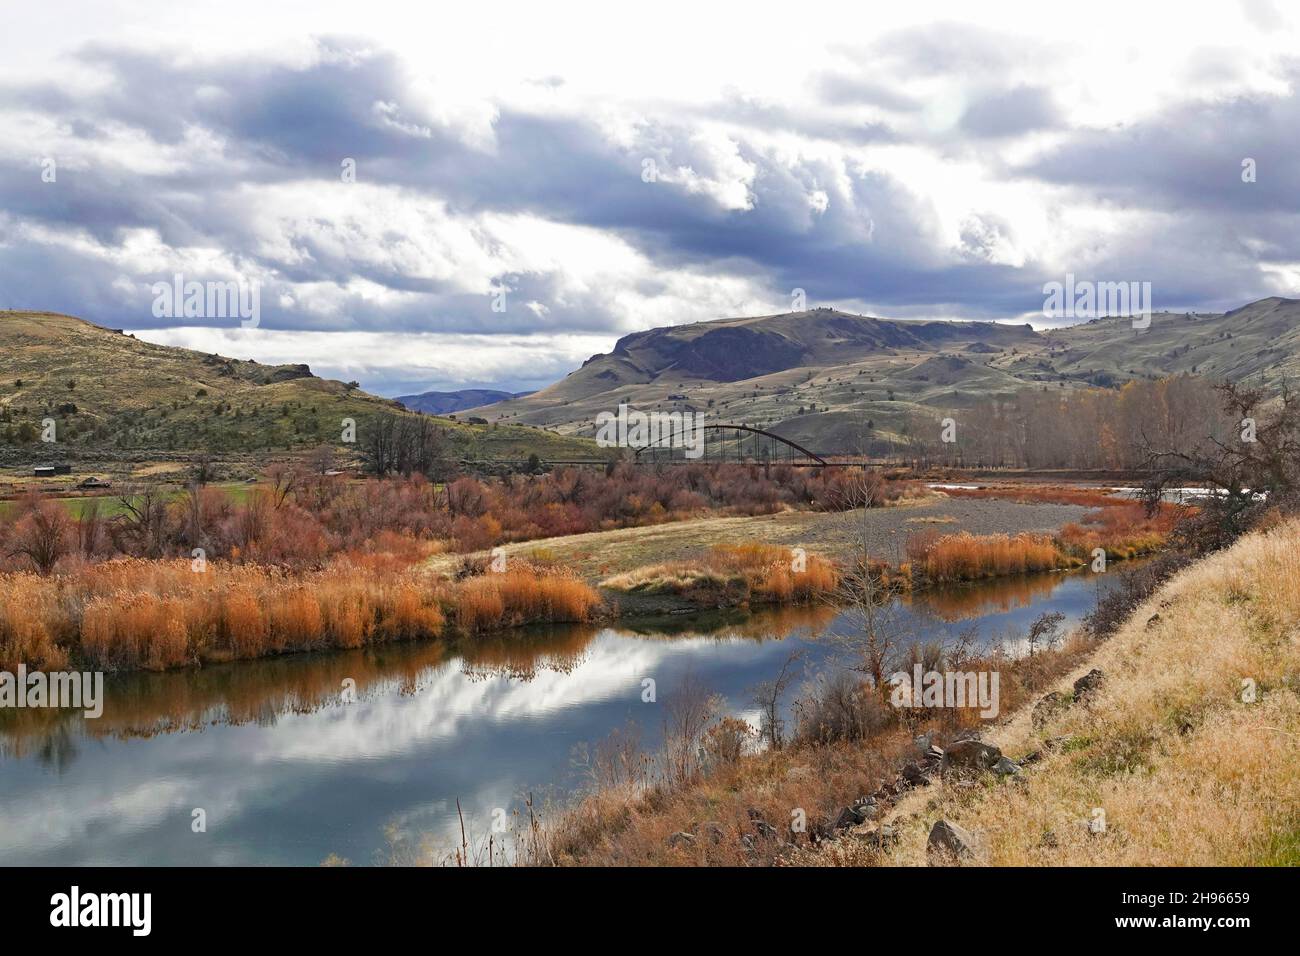 The John Day River near Clarno, Oregon, in the high desert region of central Oregon. Stock Photo